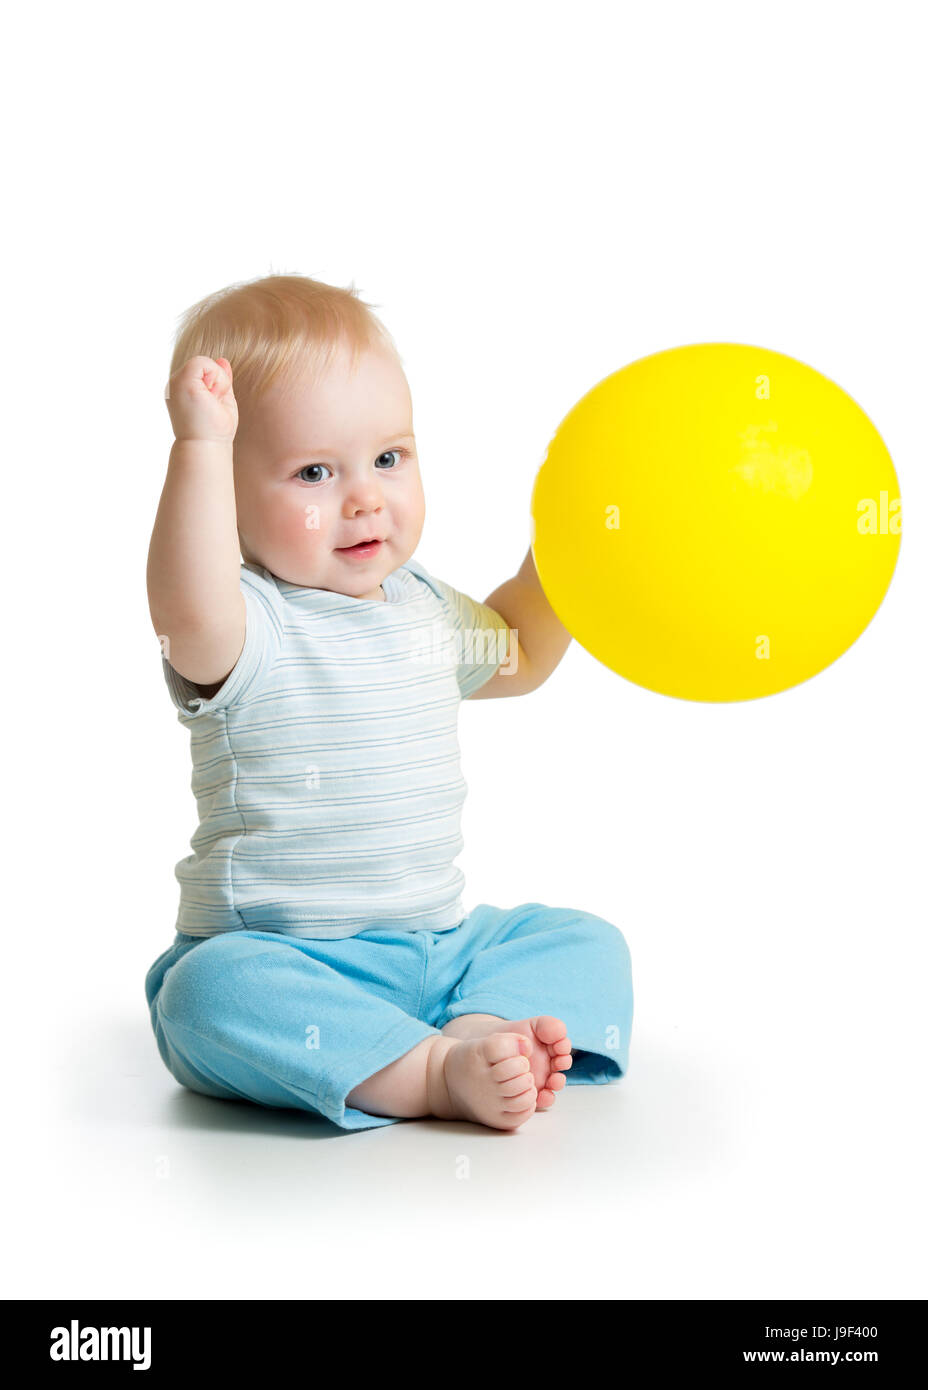 Cute baby boy with yellow balloon Stock Photo